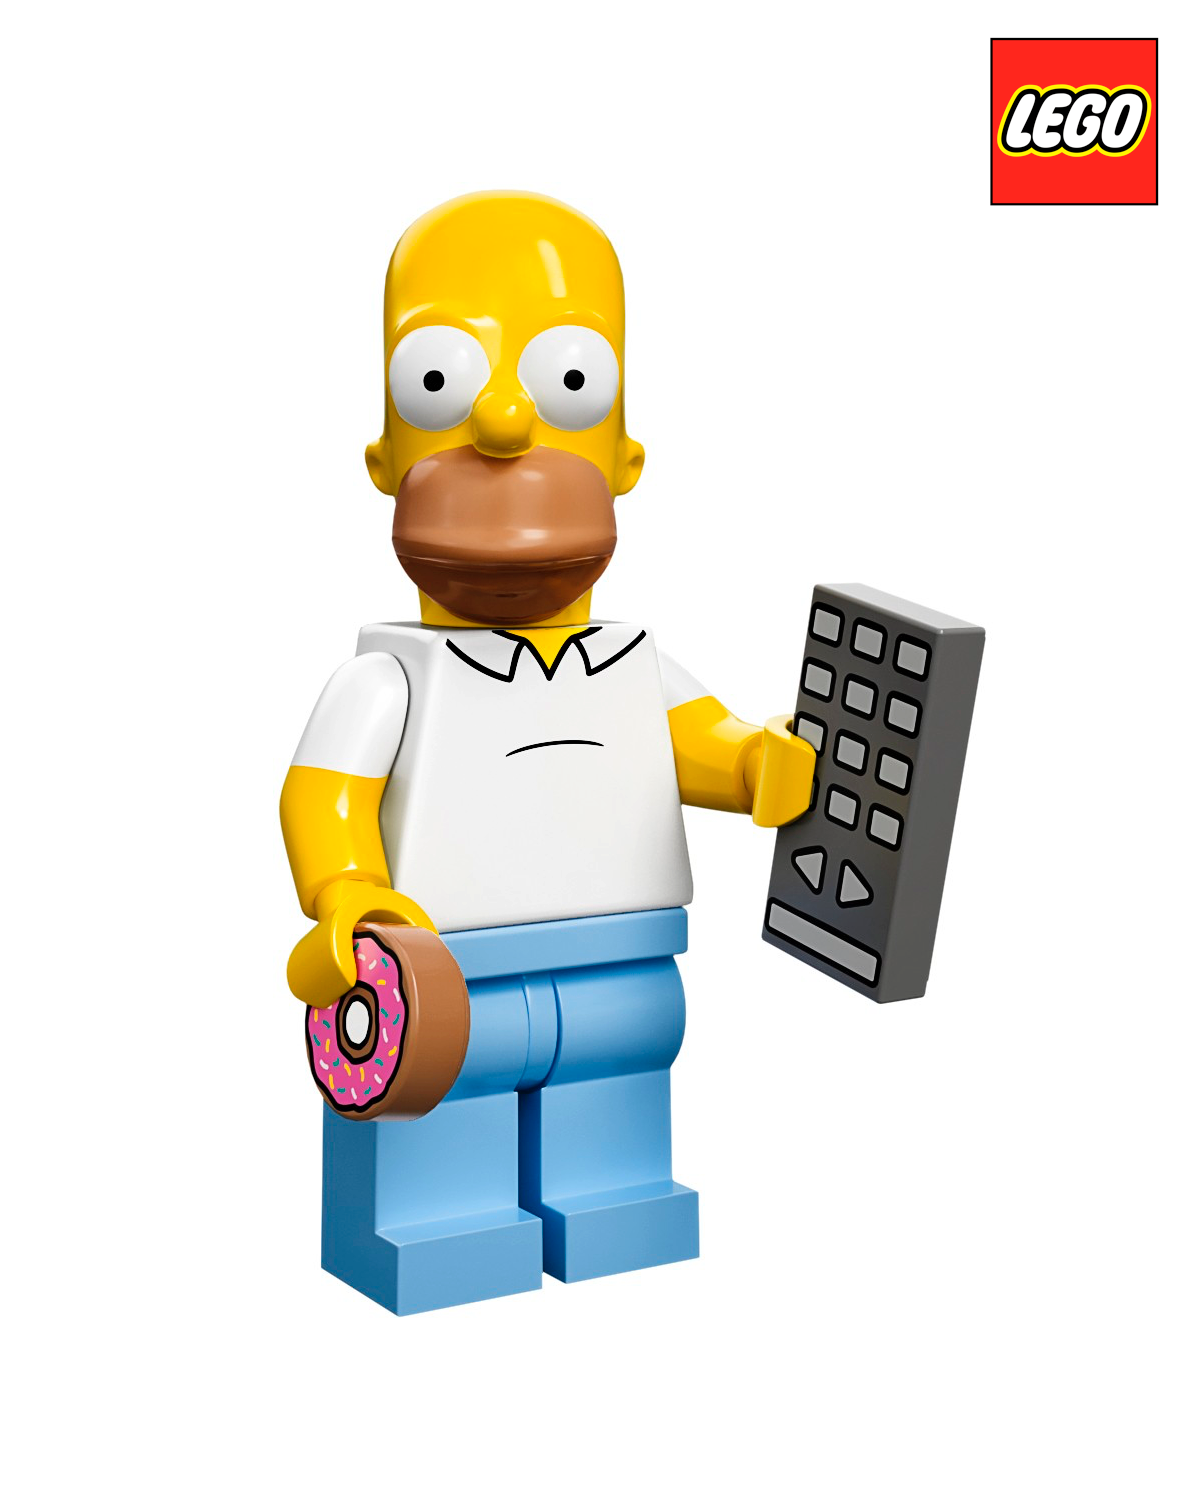 Homer Simpson - The Simpsons - Series 1  | LEGO Minifigure | NEW CMF